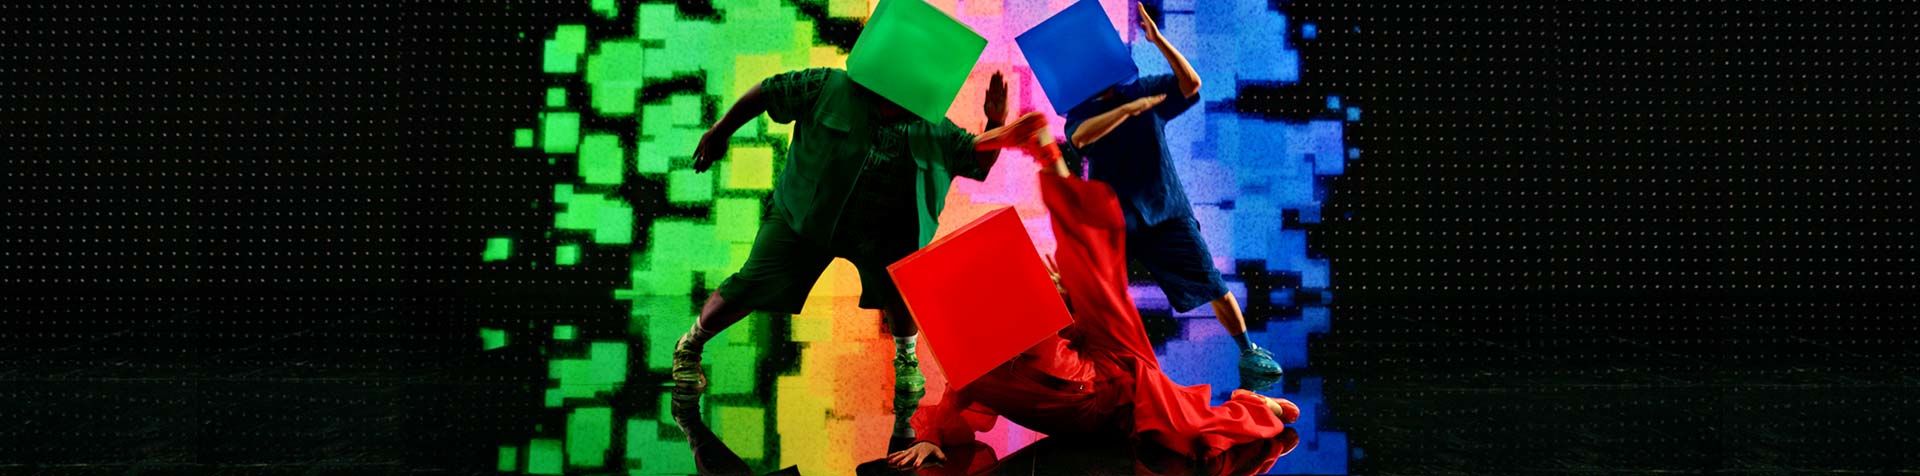 "Pixel by Pixel" 캠페인 영상 도입부의 스틸 이미지입니다. 각각 초록 픽셀과 빨강 픽셀을 표현한 댄서 두 명이 머리에 LED 큐브를 쓴 채 검은 배경 앞에서 움직이는 장면을 담았습니다.